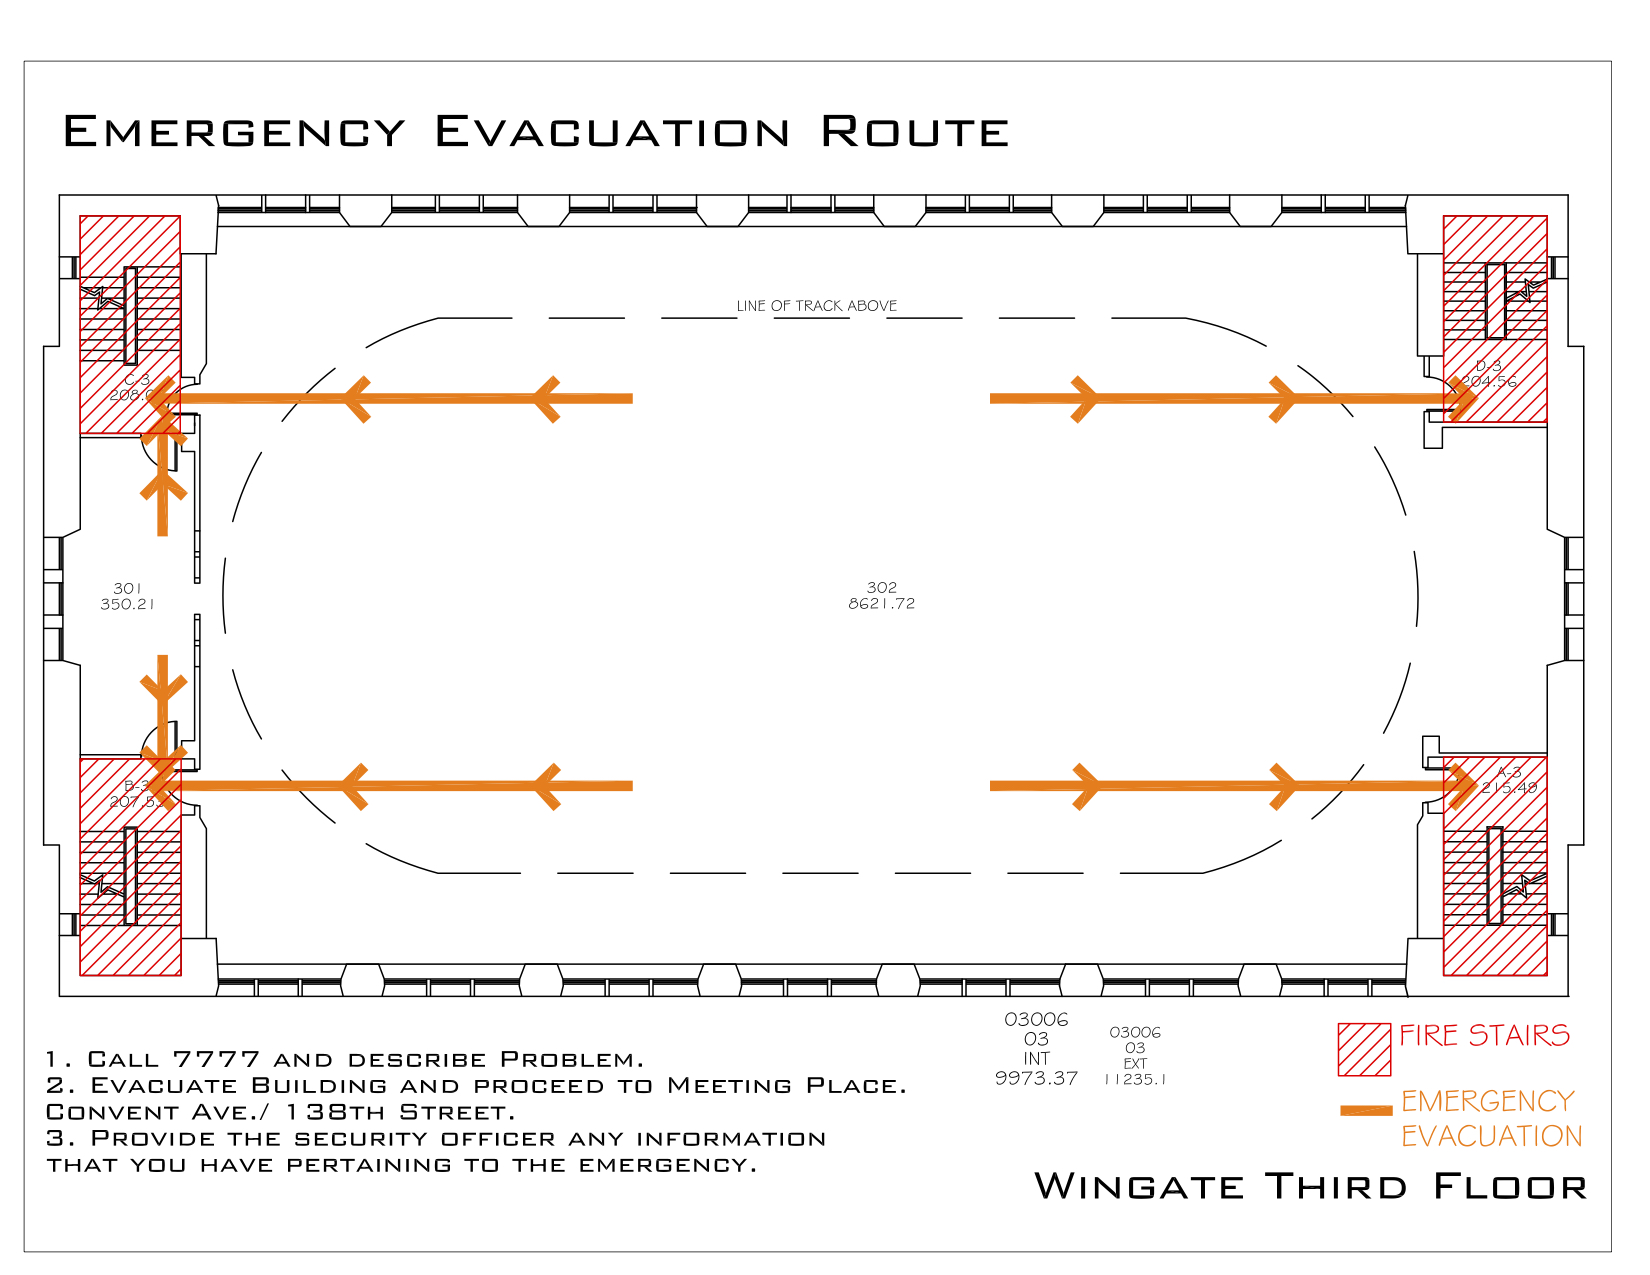 Wingate Hall - Evacuation Route 4